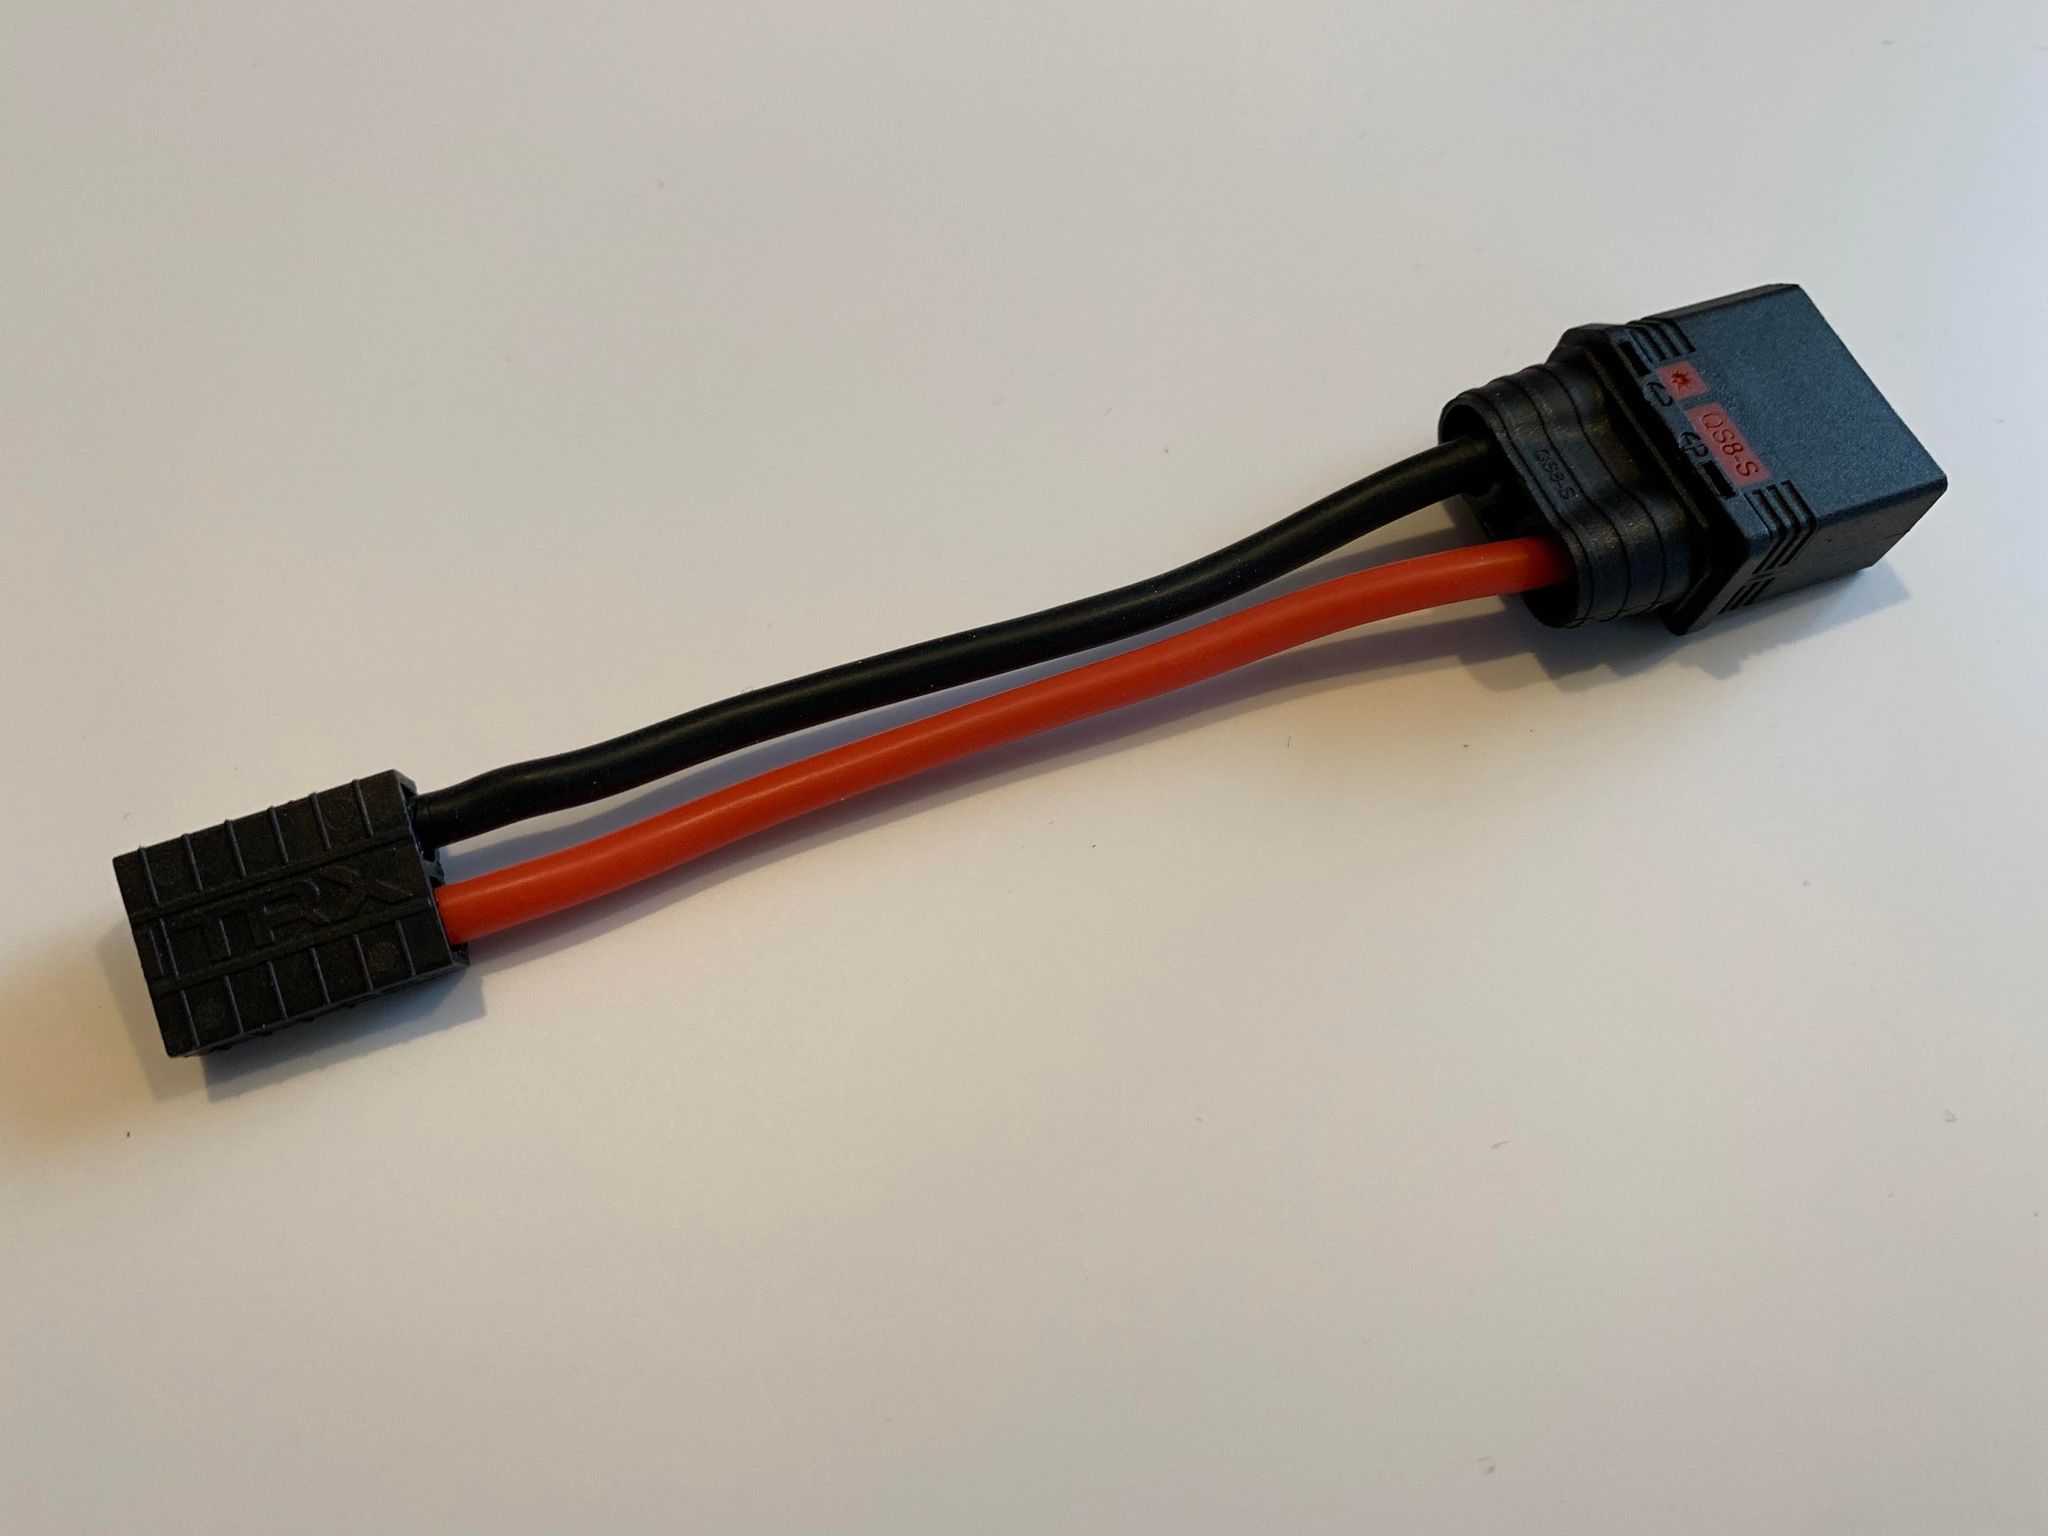 QS8 Anti Spark Verloopkabel voor Traxxas modellen 12AWG Siliconen kabel